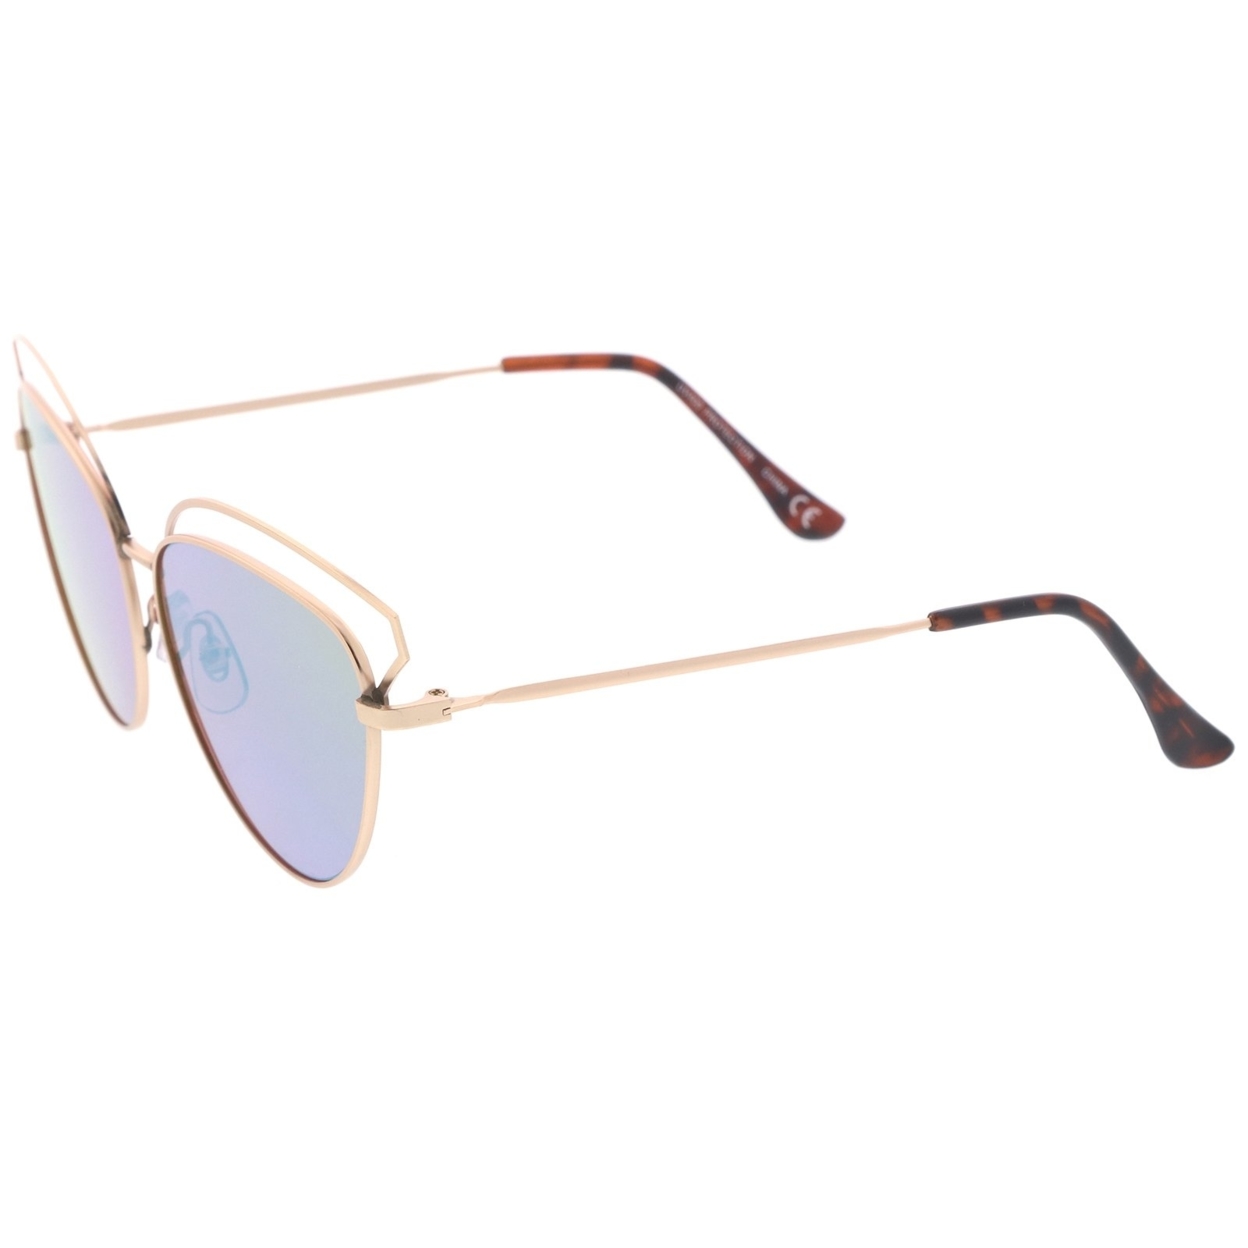 Women's Open Metal Frame Colored Mirror Oversize Cat Eye Sunglasses 58mm - White / Blue Mirror